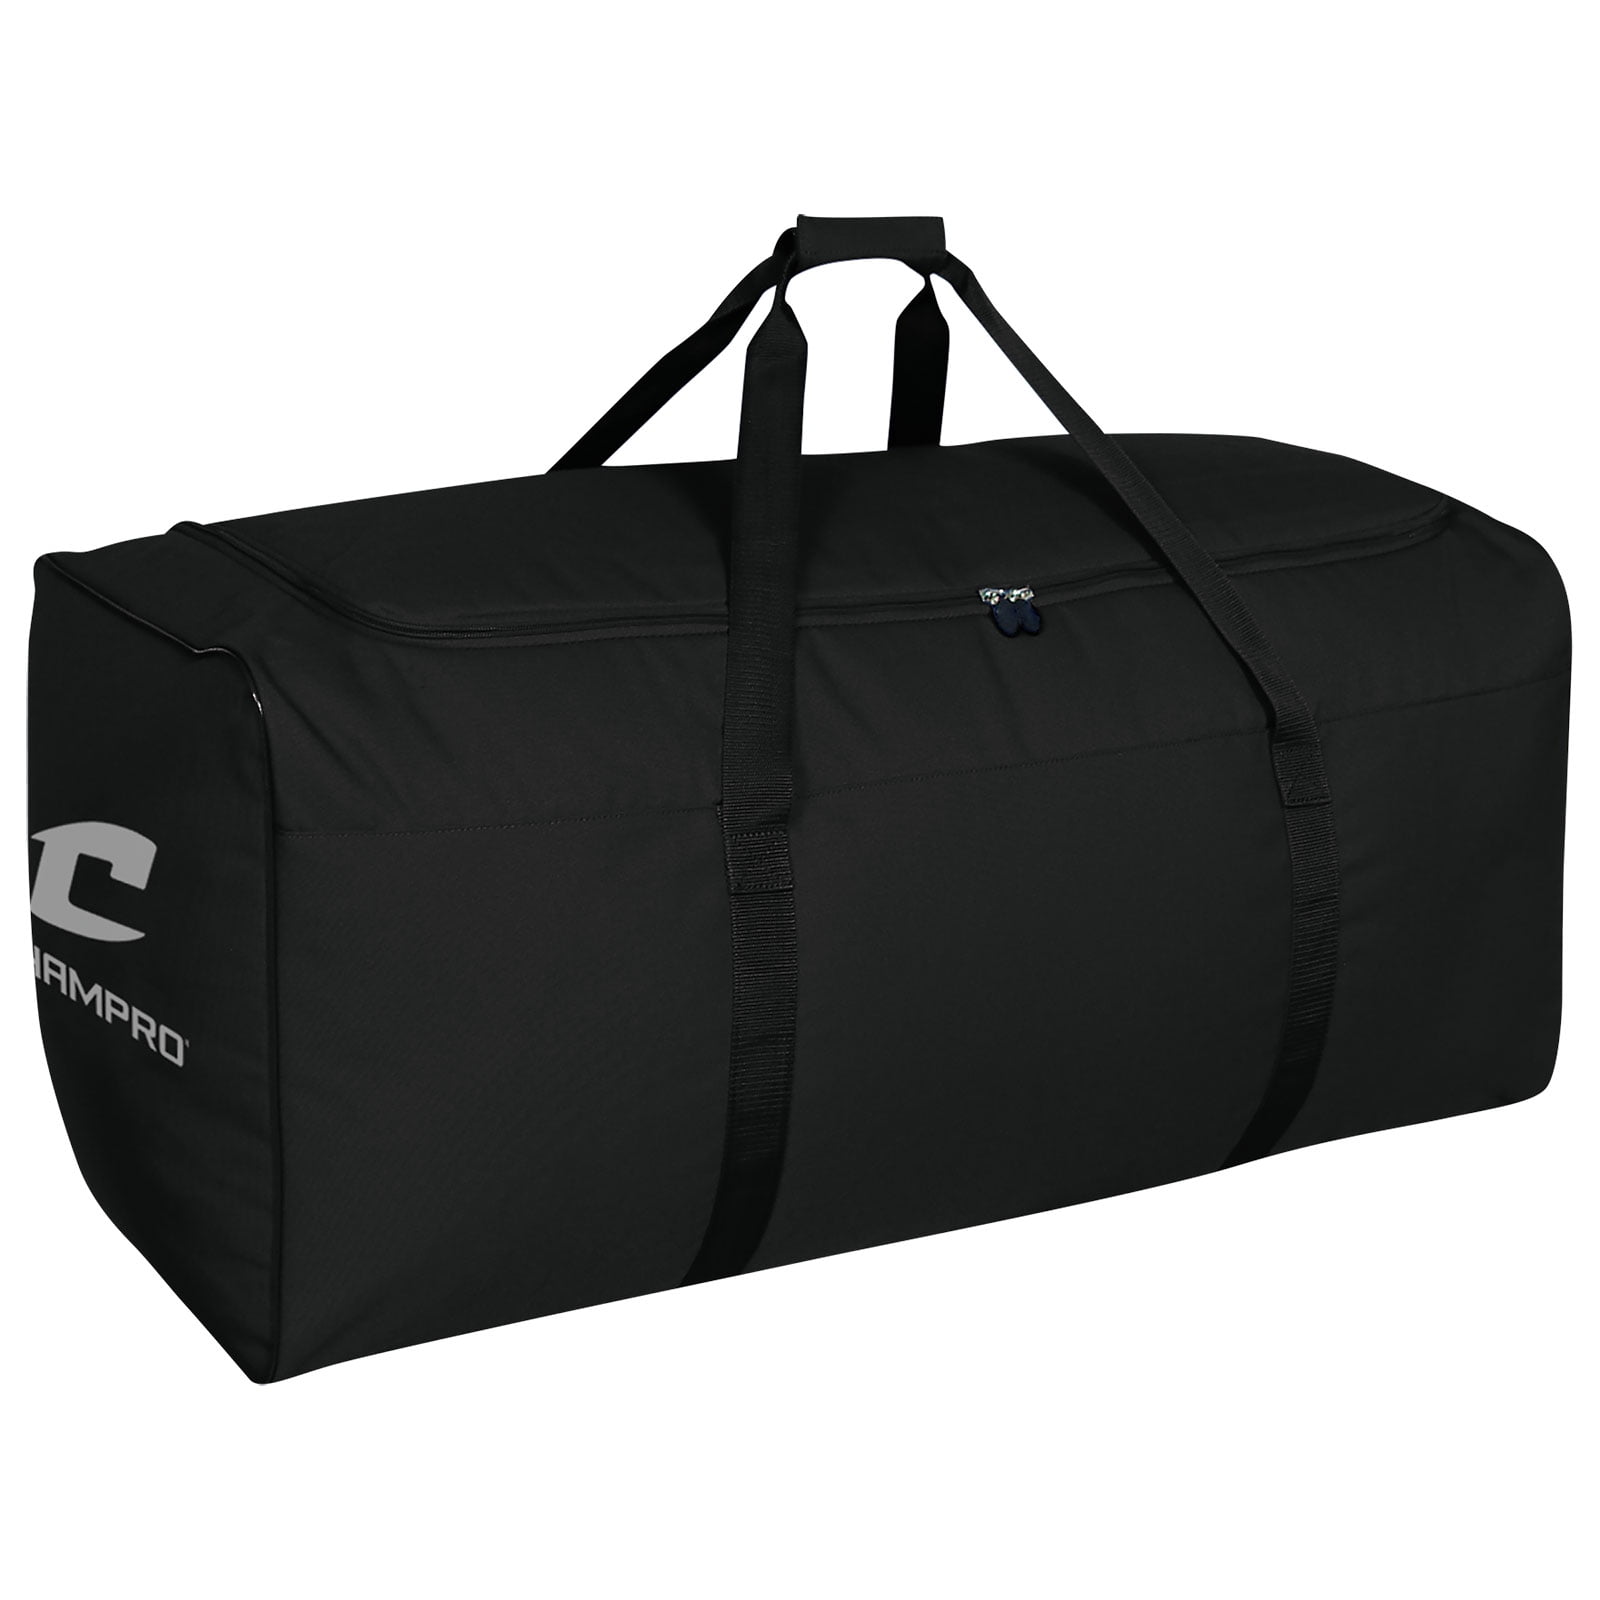 Champro Oversize Equipment Bag (Black, 36 x 16 x 16-Inch)